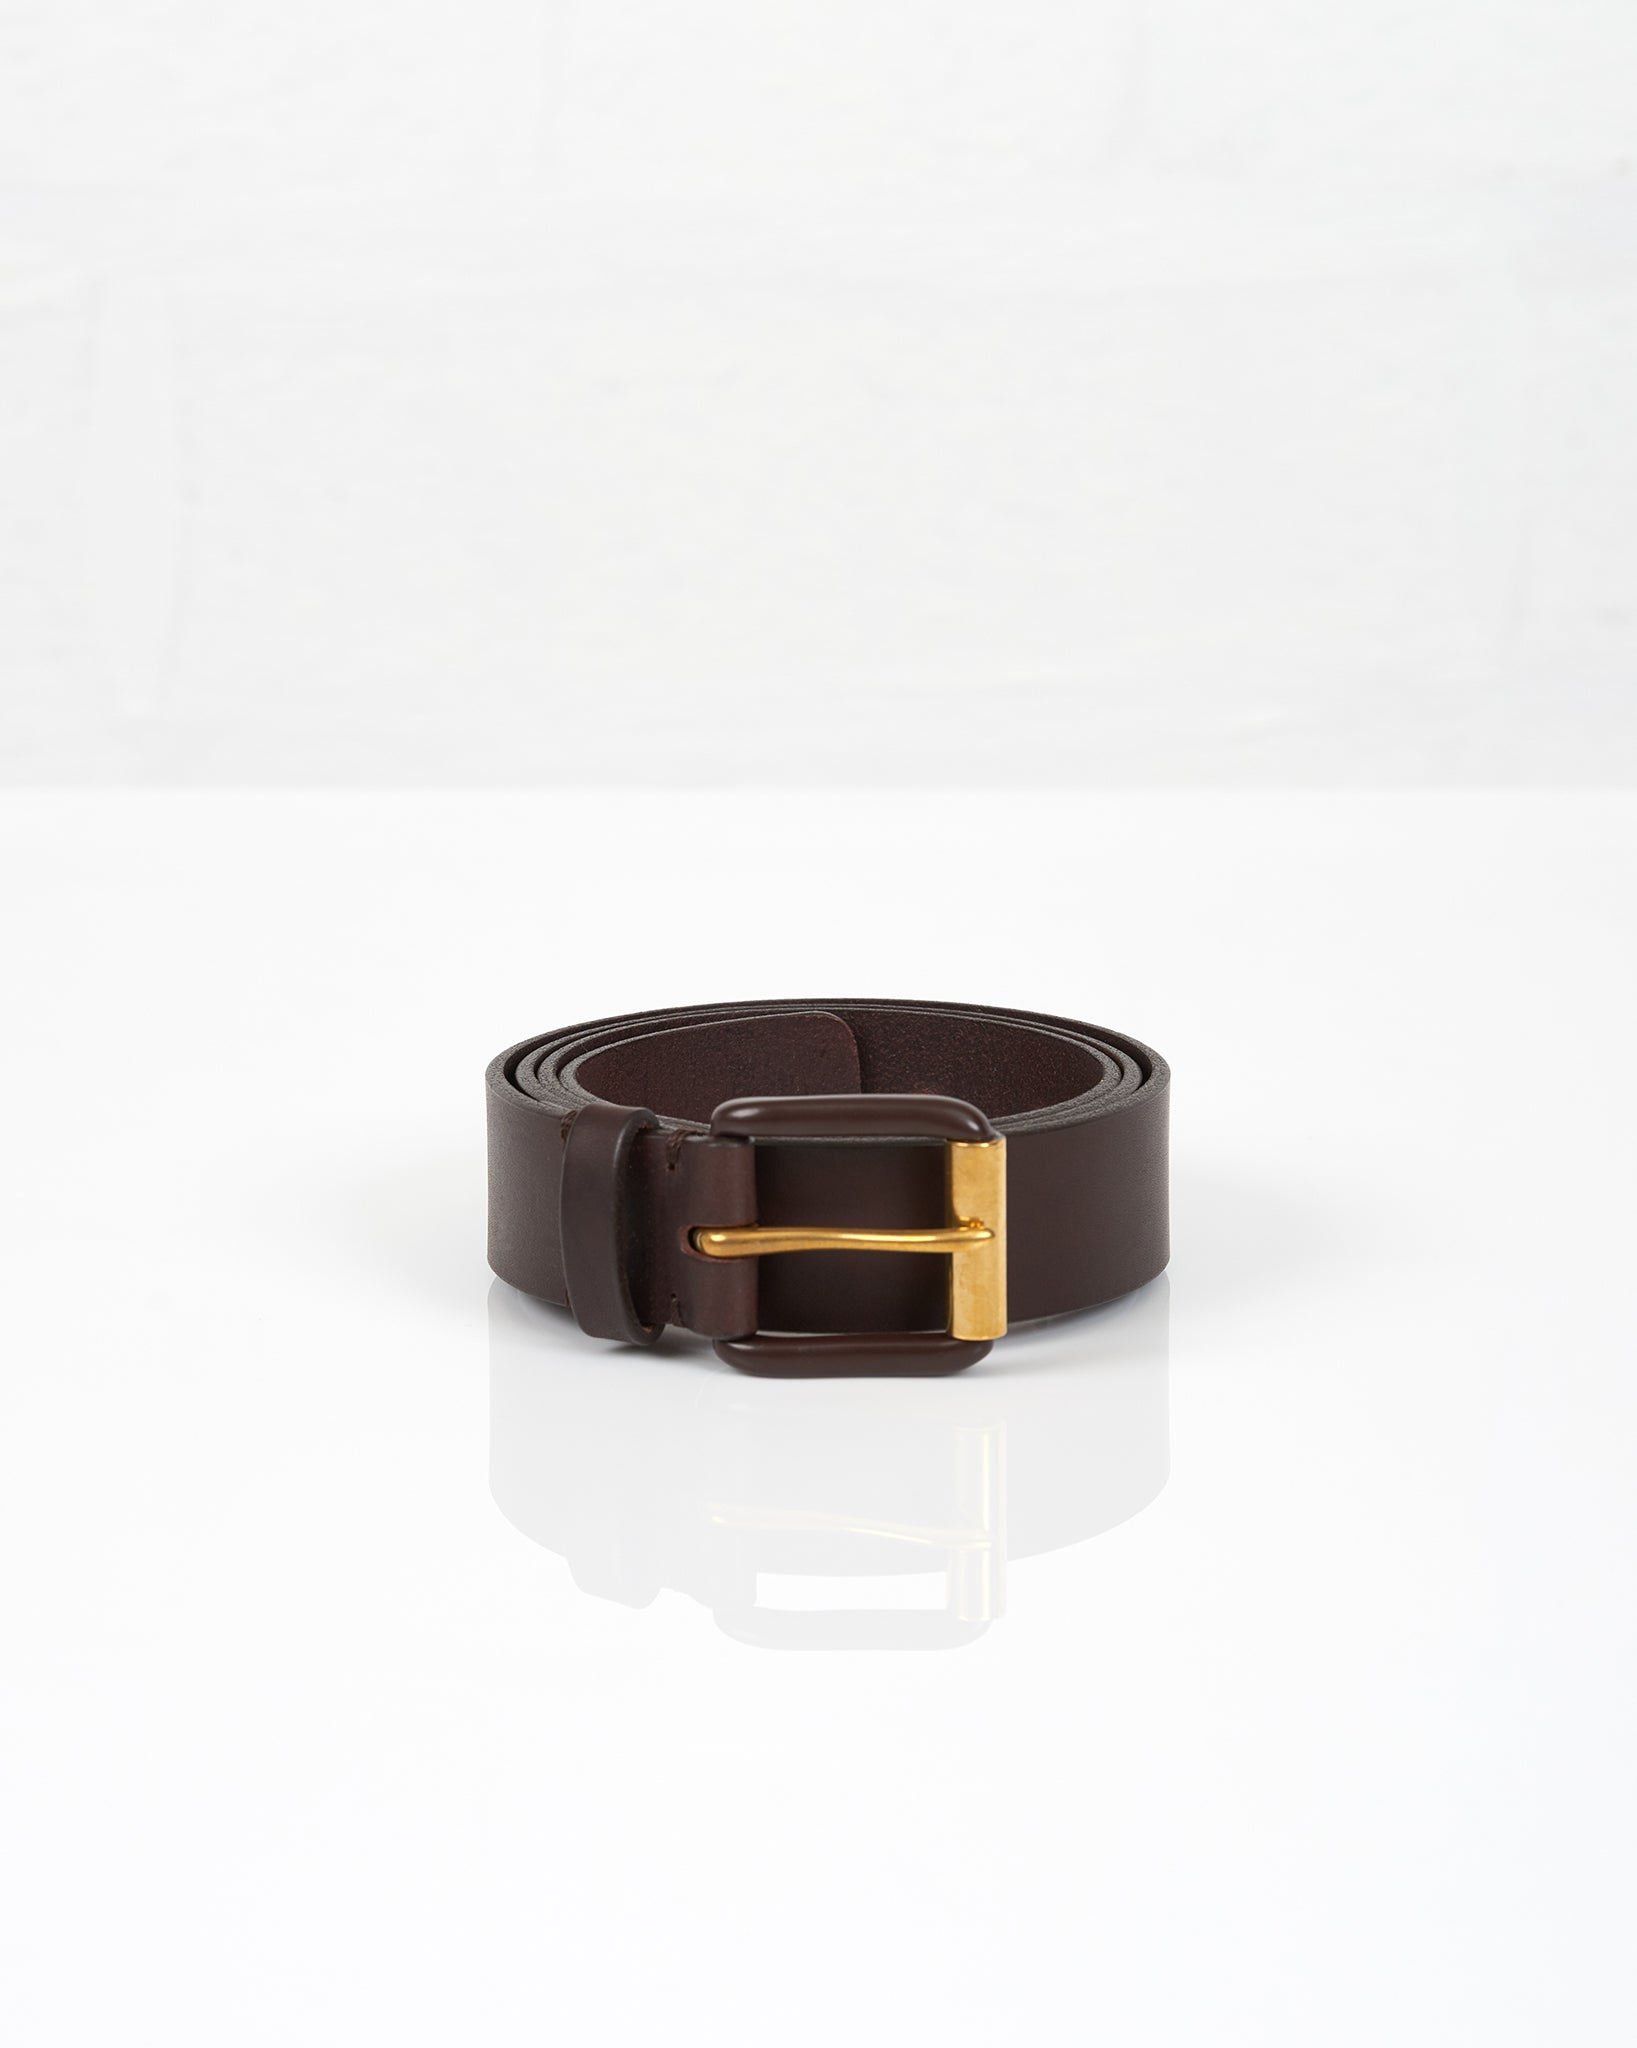 Modernist Exposed Belt - Chocolate Brown / Brown